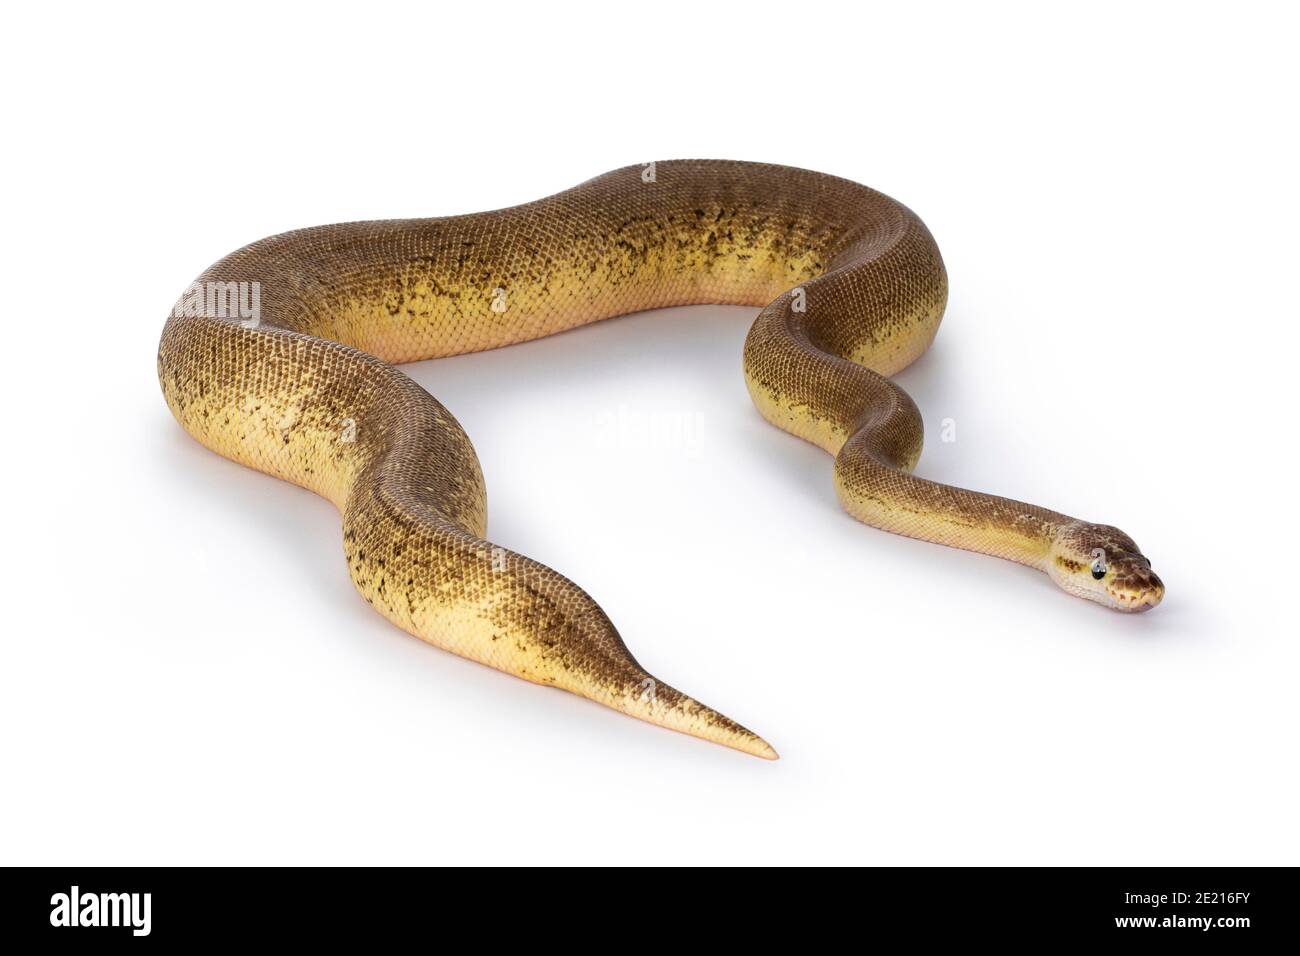 Adult Pinstripe Cinnamon Pastel Fire Ballpython aka Python regius snake. Full body shot on white background. Stock Photo